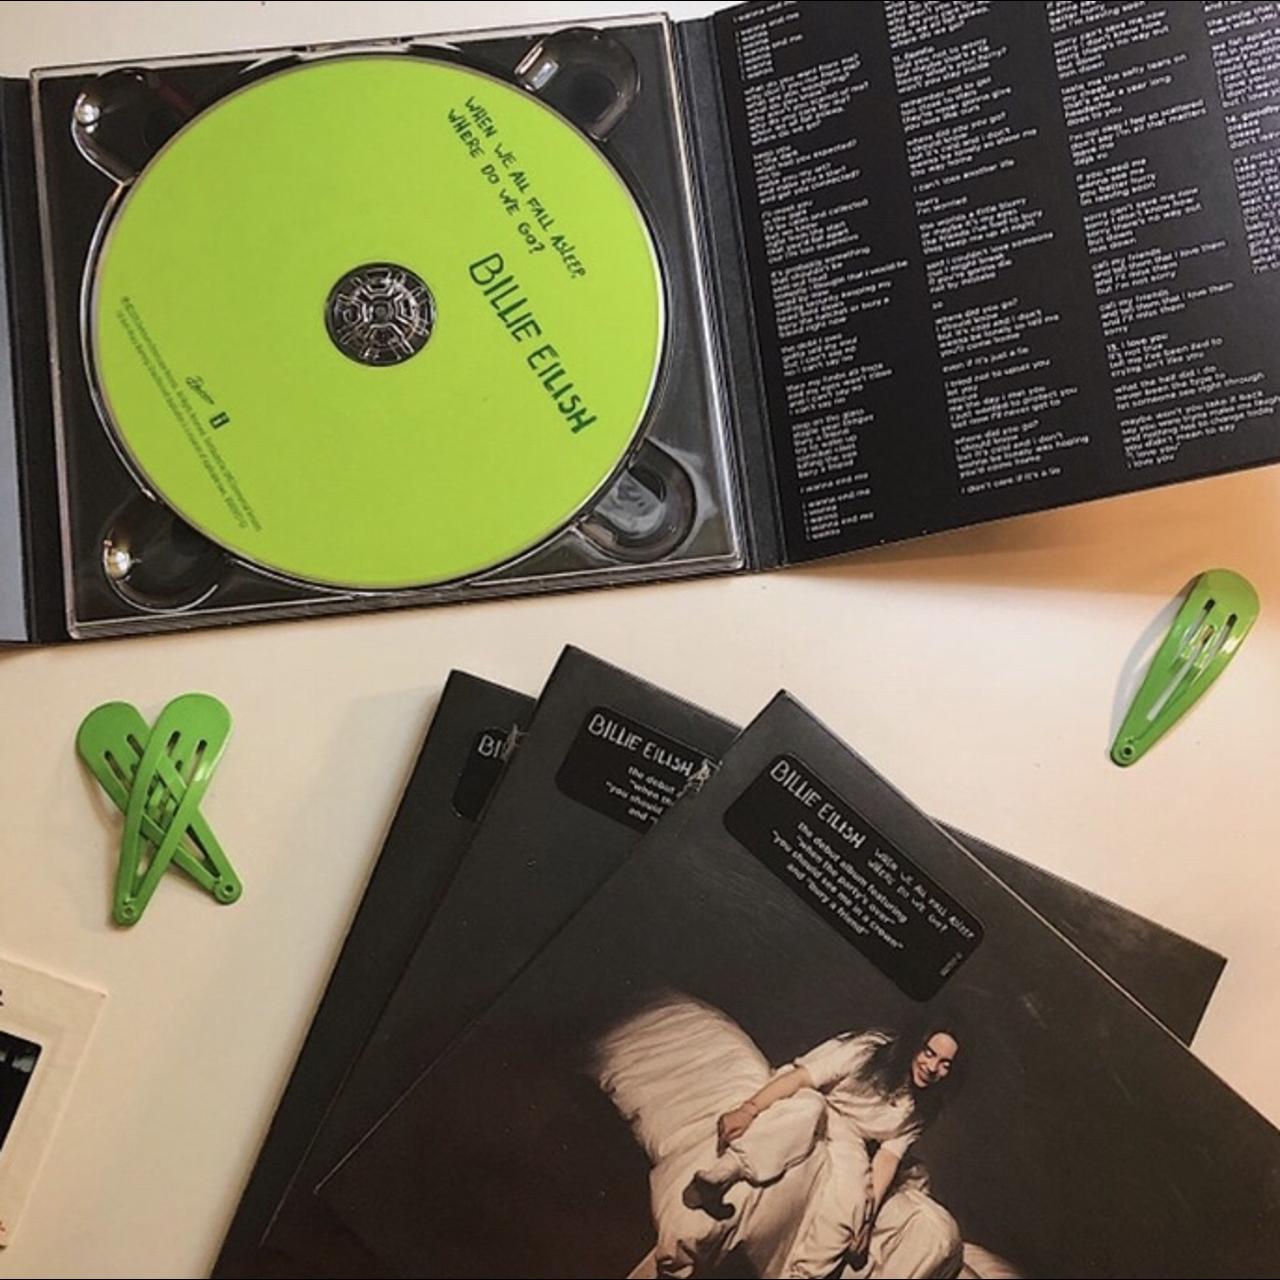 Billie eilish CD, ( I have 3), never opened or